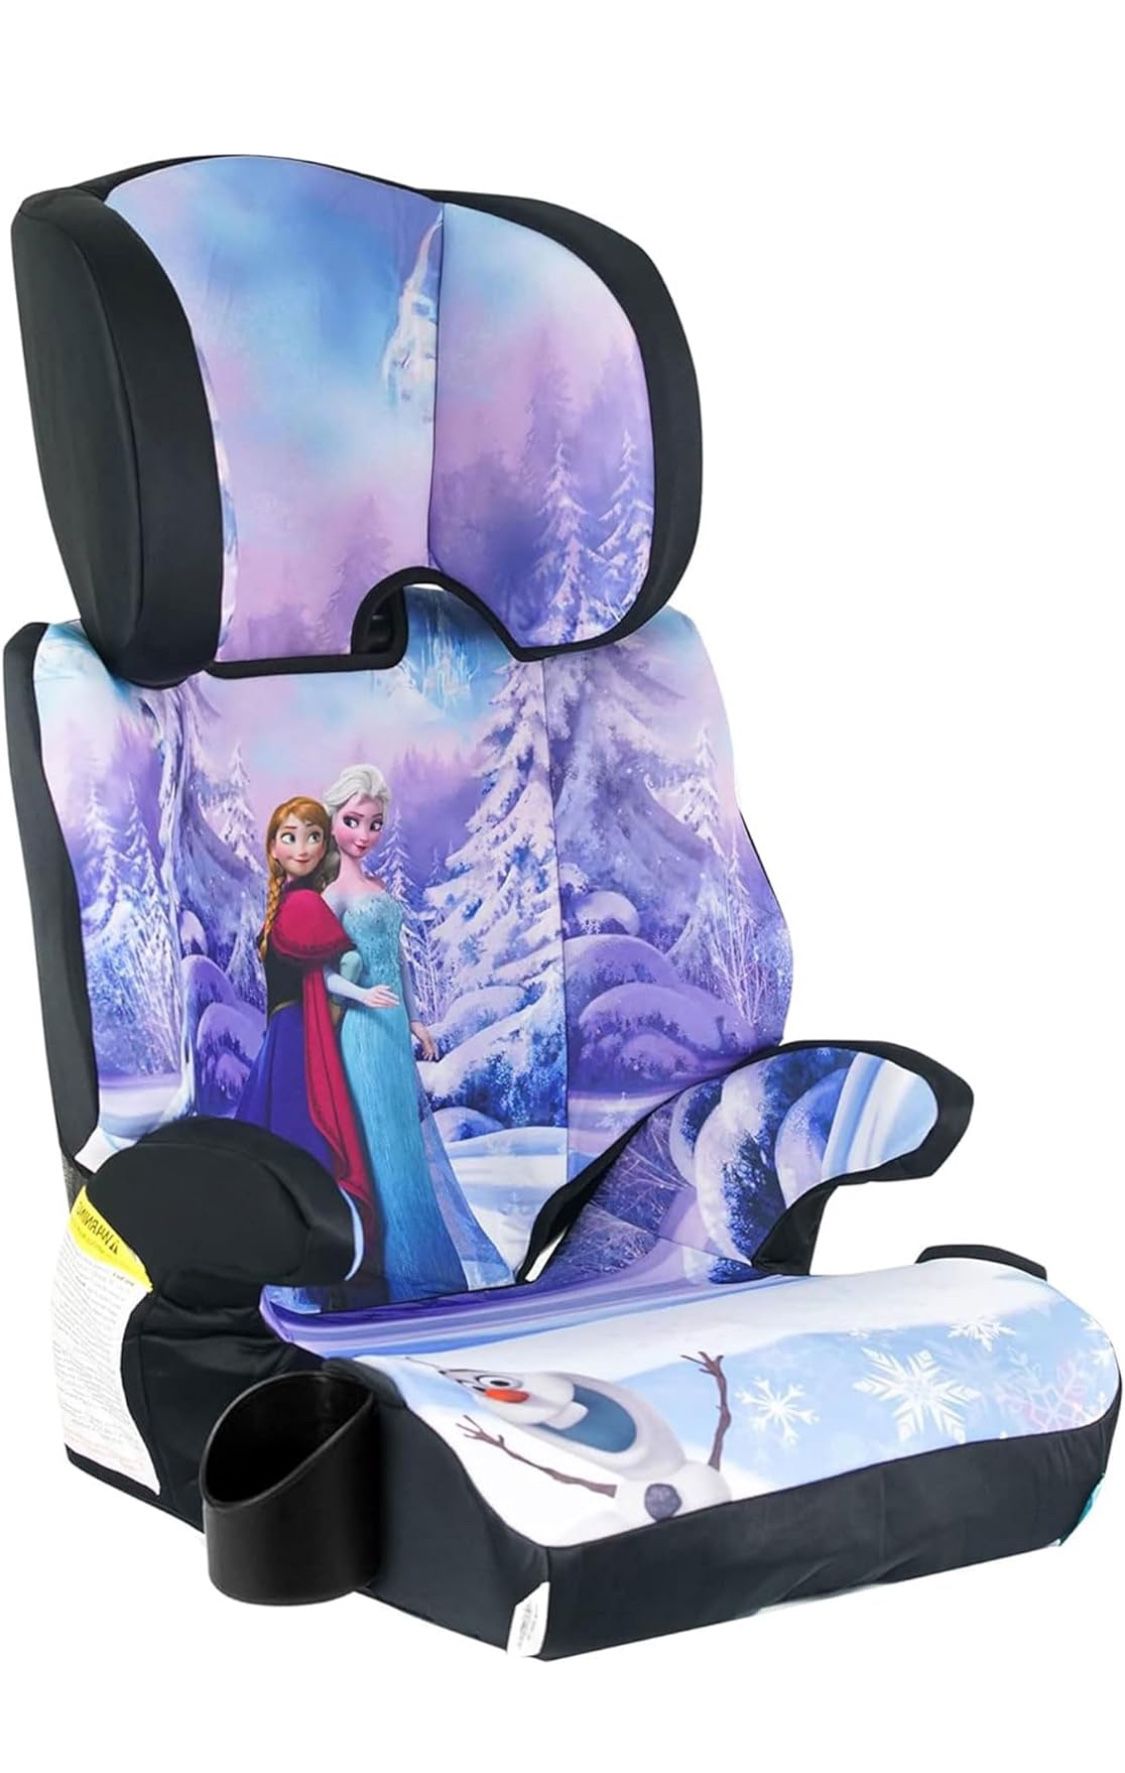 KidsEmbrace High Back Booster Car Seat, Disney Frozen Elsa and Anna